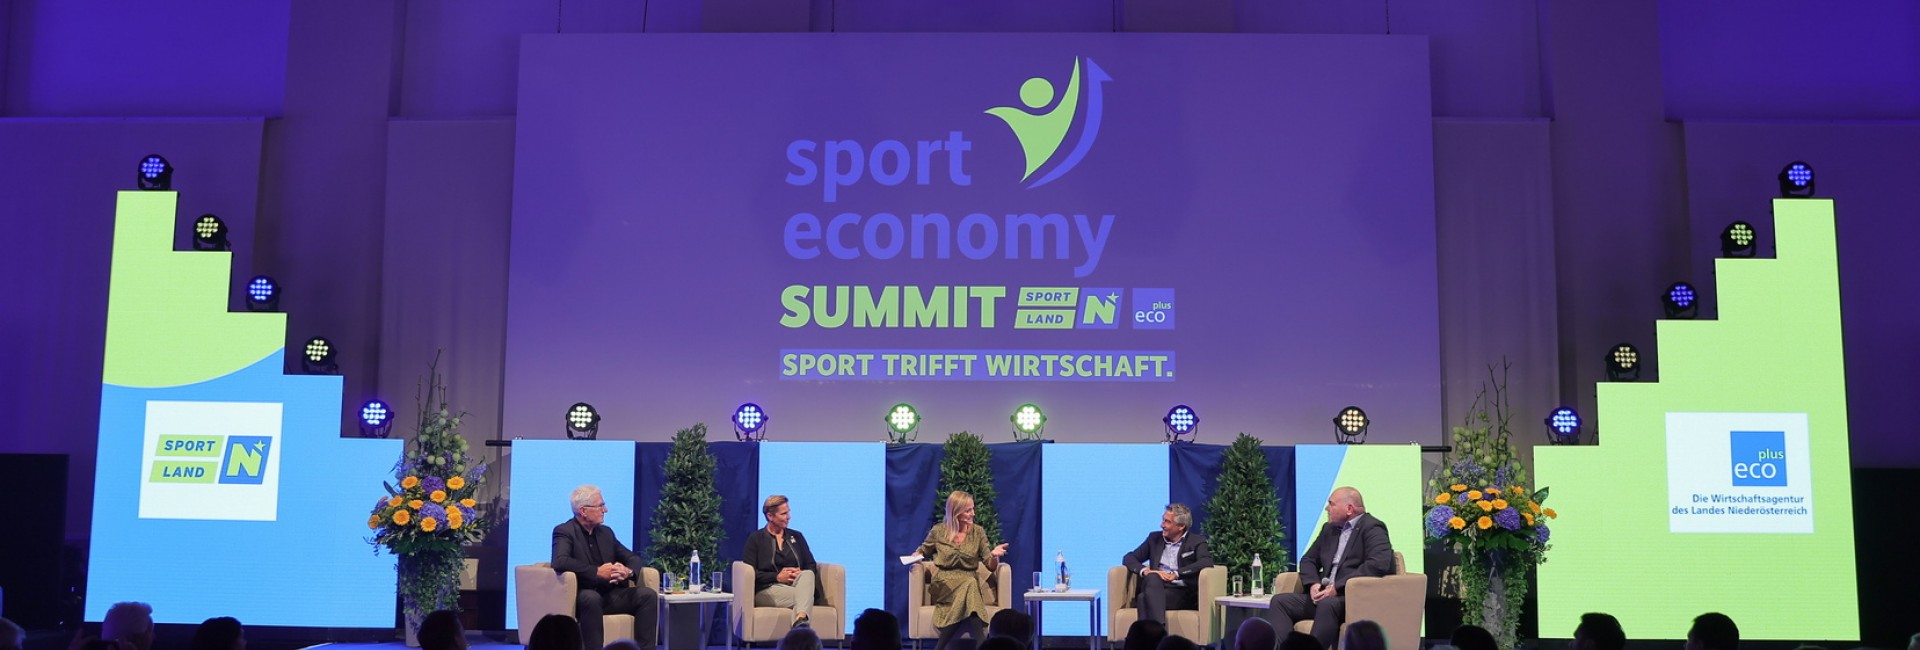 sport economy summit 2022